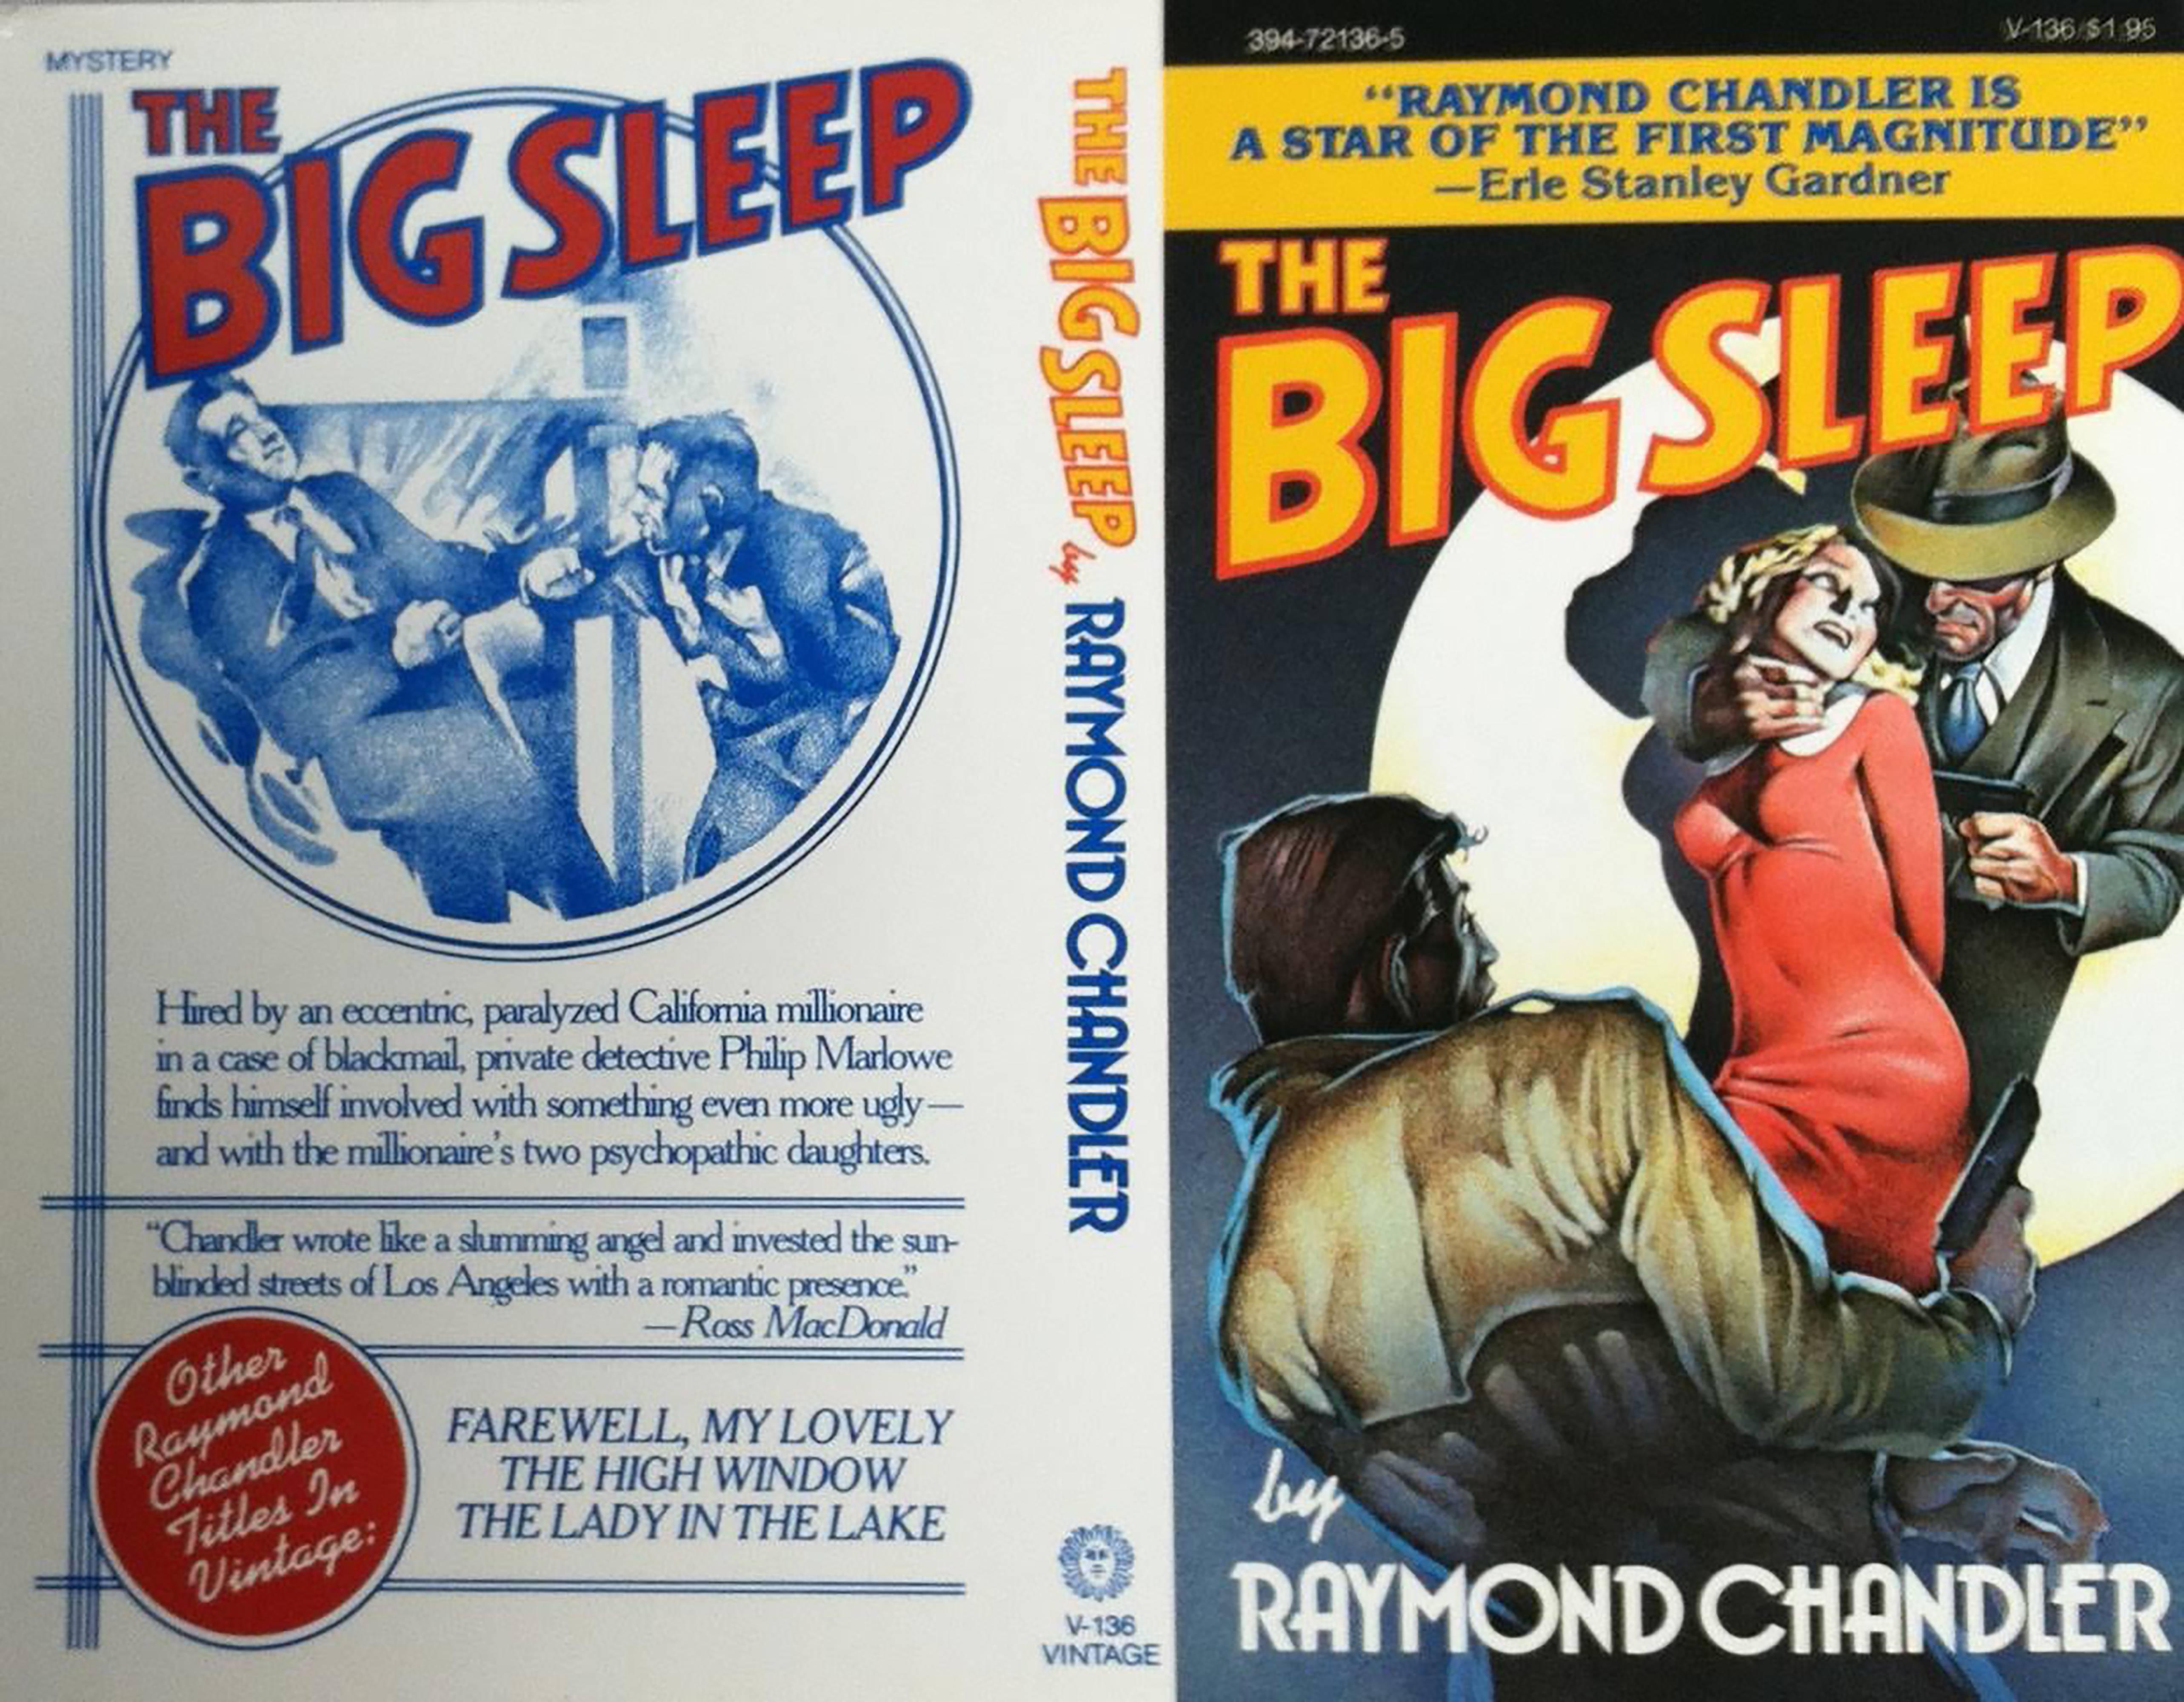 The Big Sleep, Paperback Cover - Art by Richard Waldrep